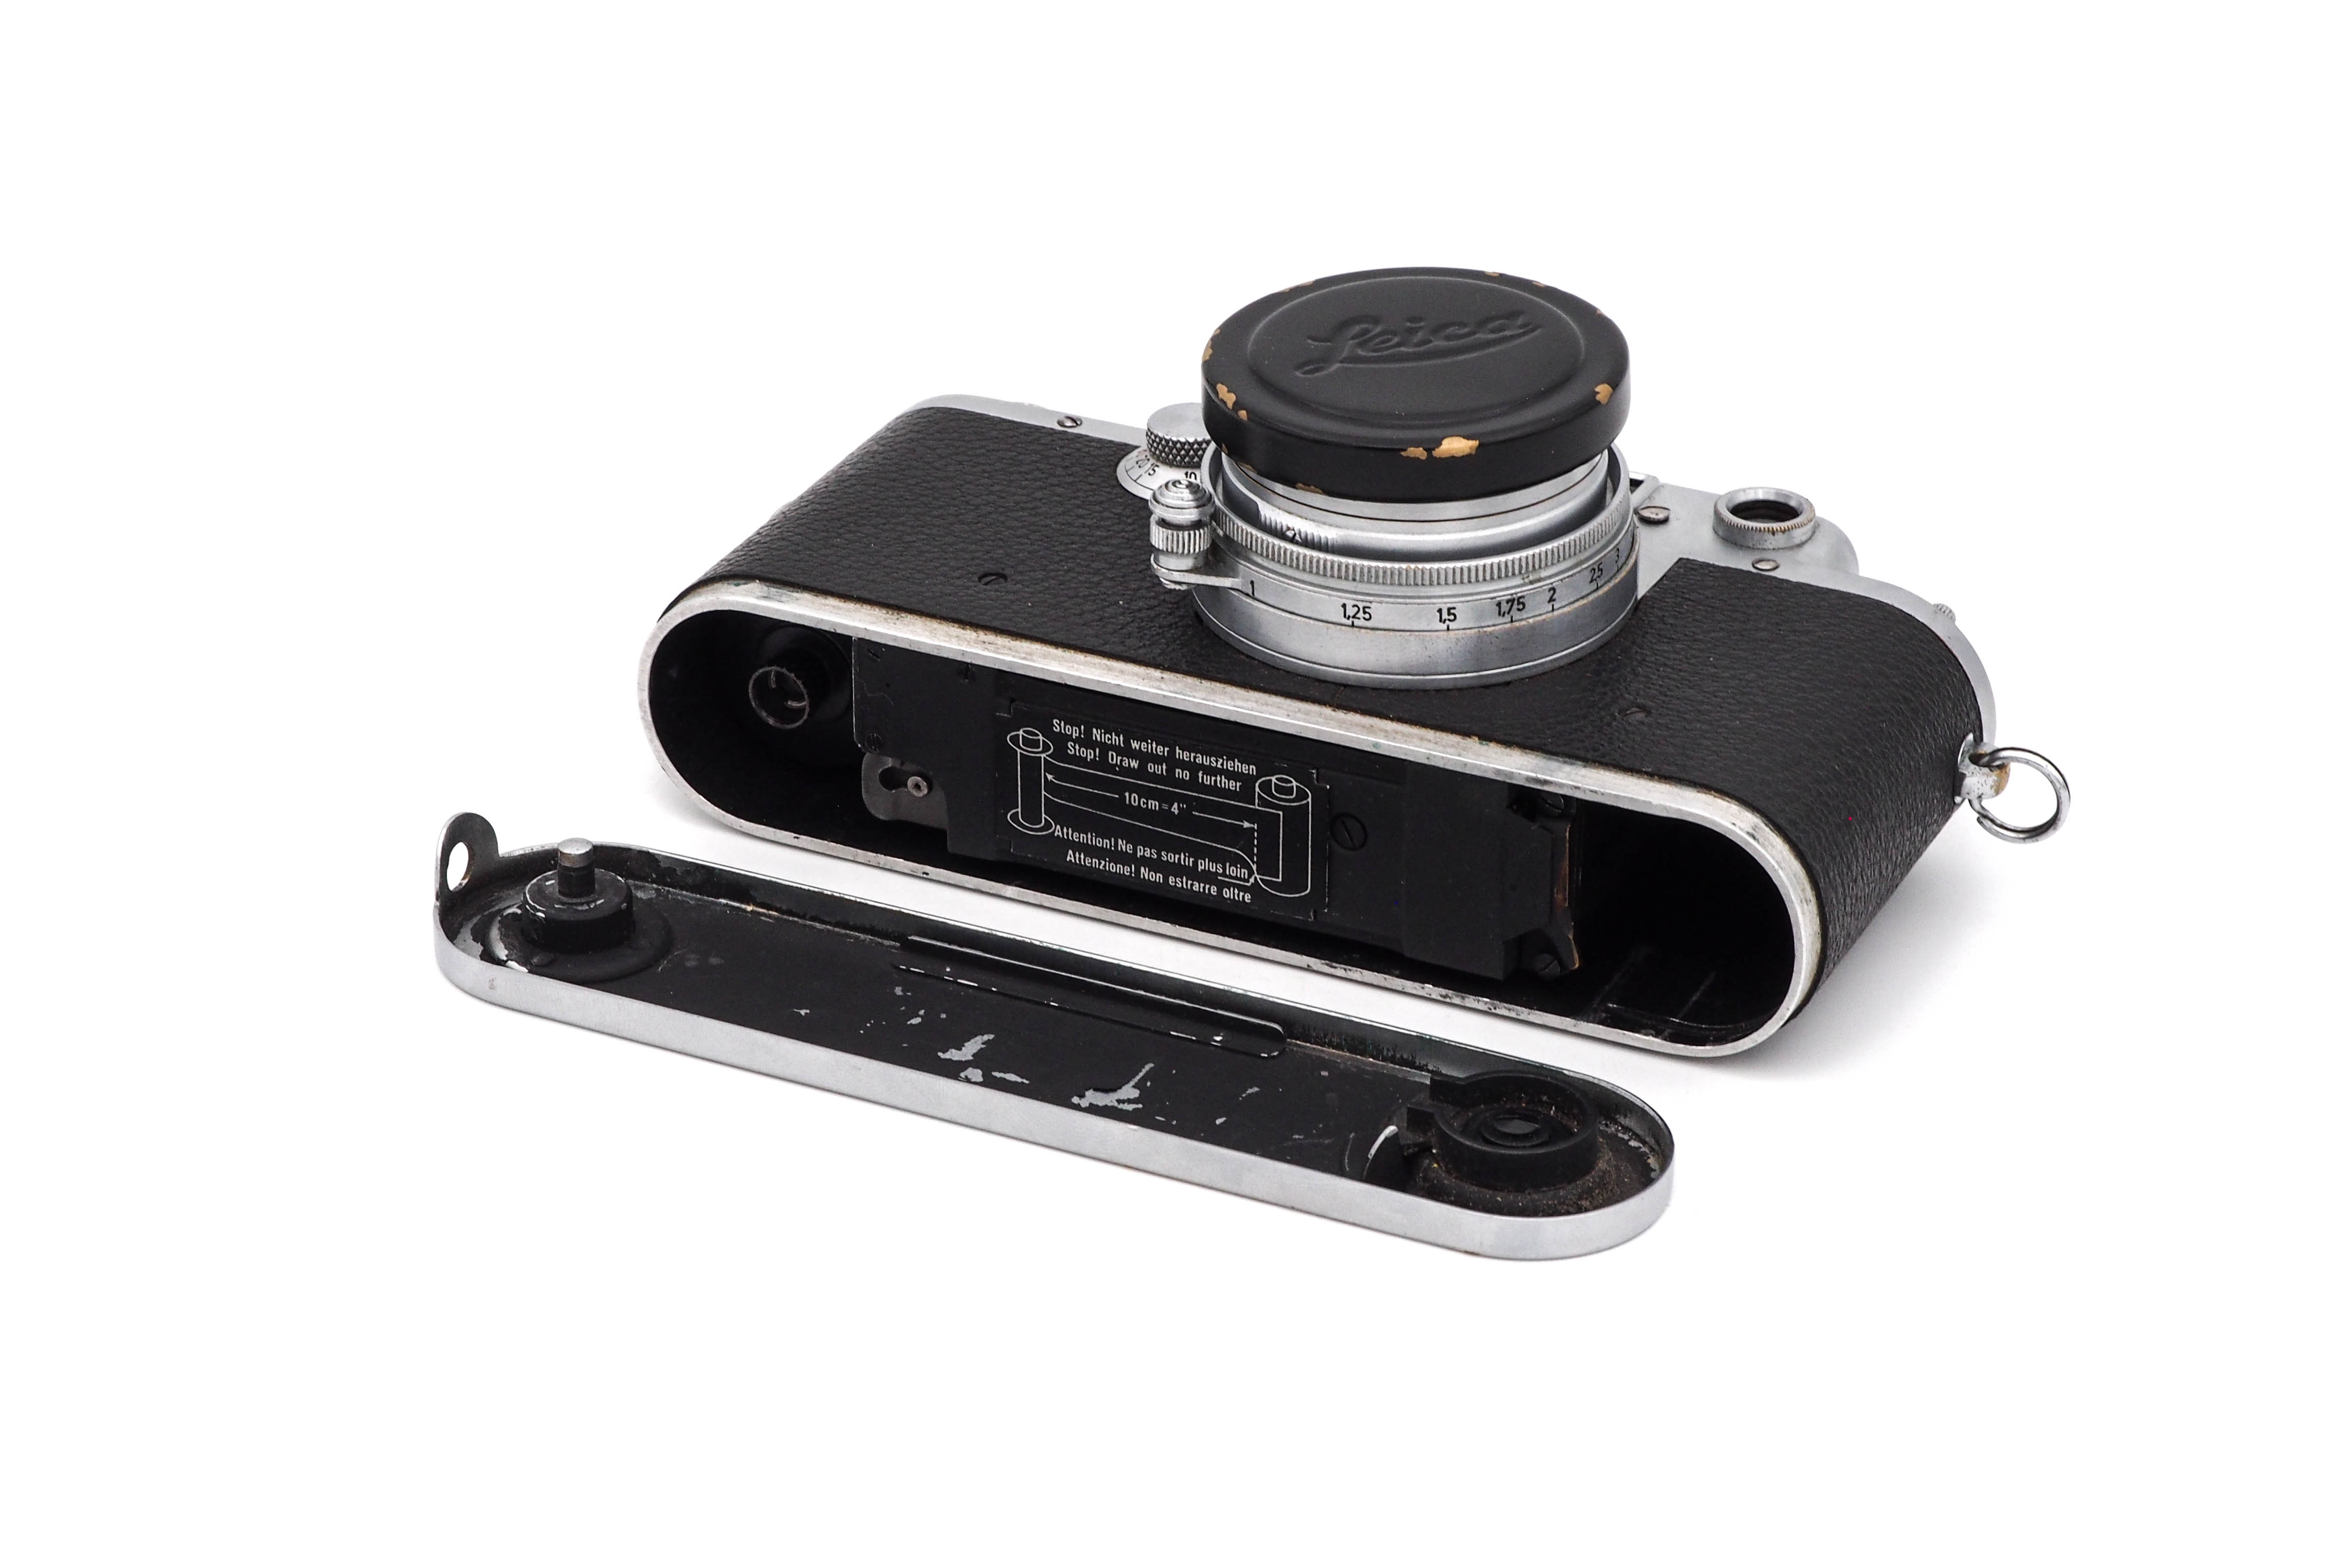 Leica IIIc (roter Verschlussvorhang) + Summitar 50mm f/2 1942